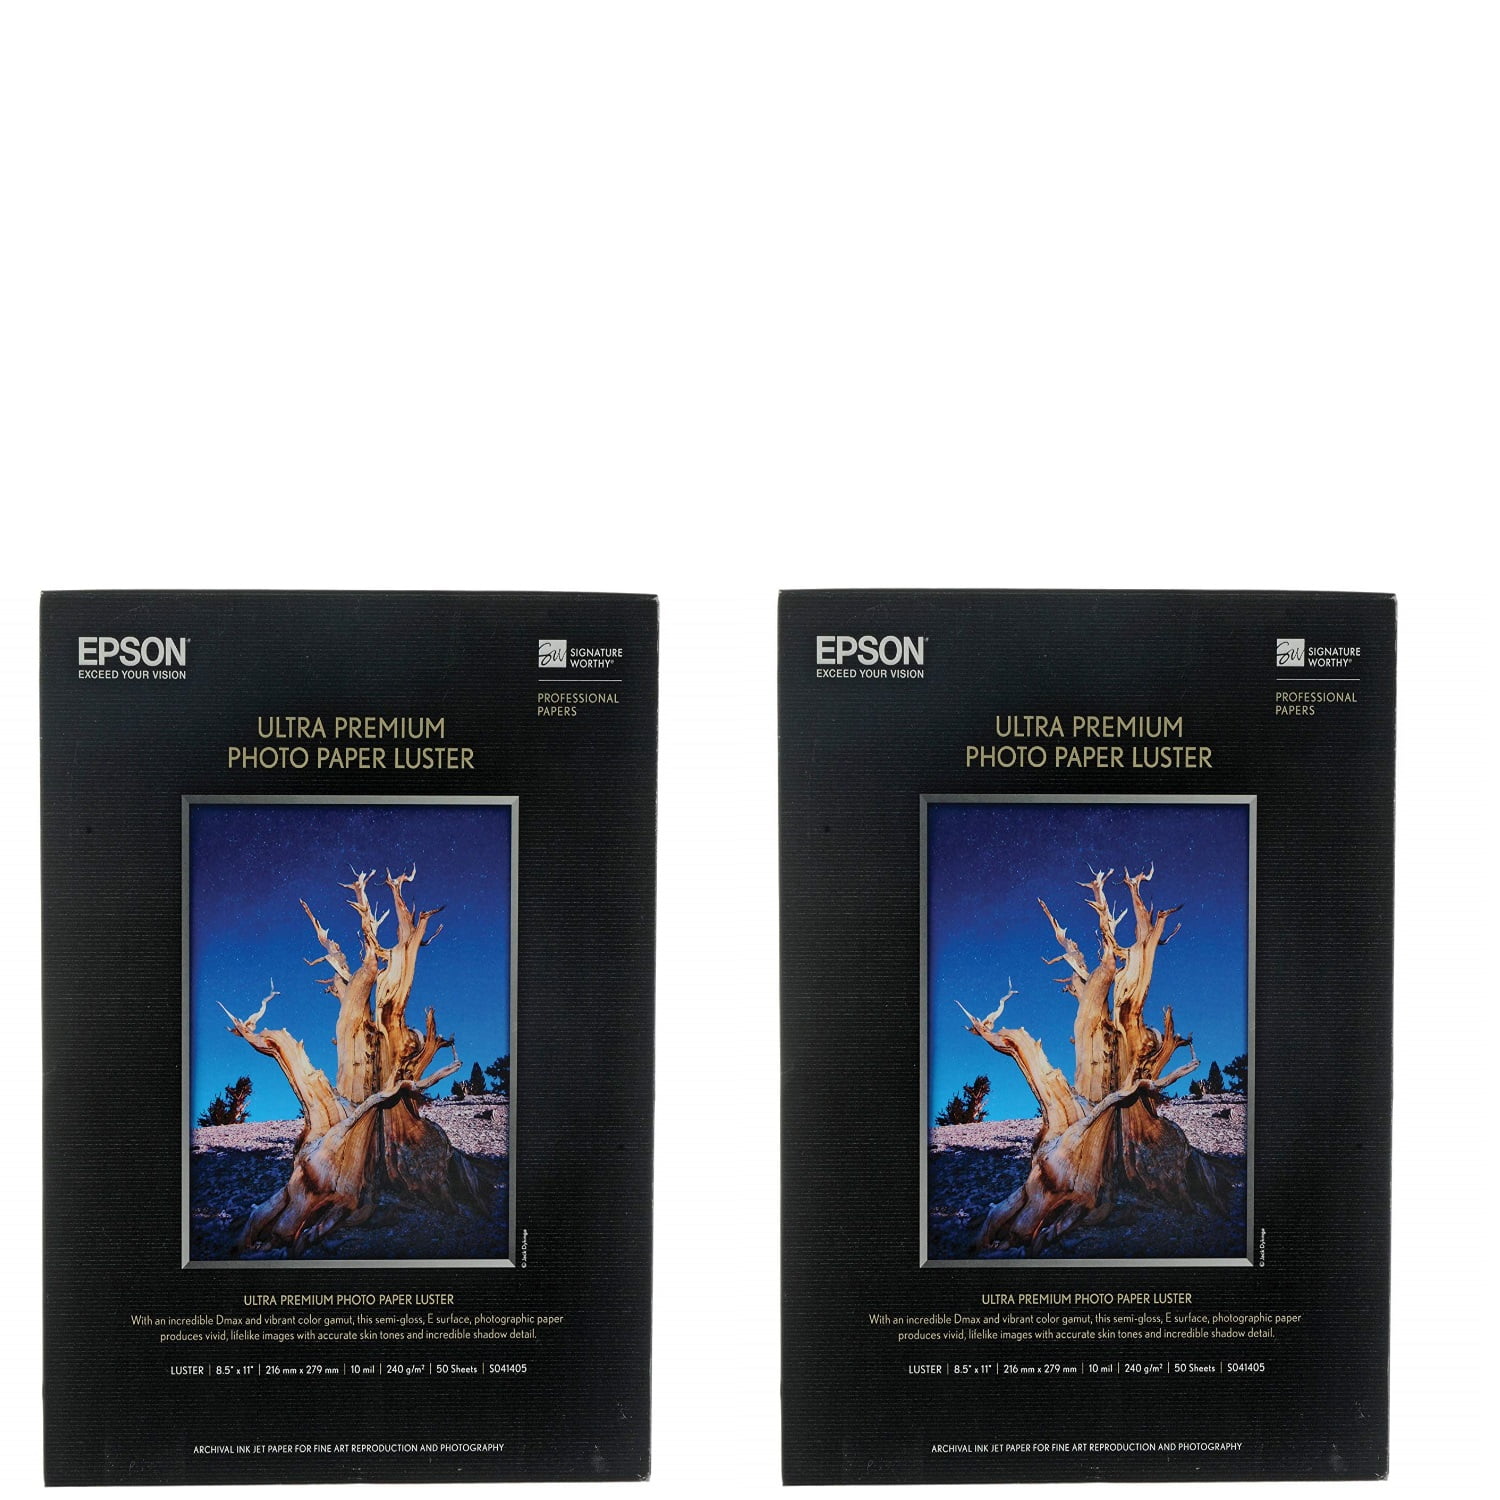 Epson Premium Matte Presentation Paper, 45 lbs., 8-1/2 x 11, 50